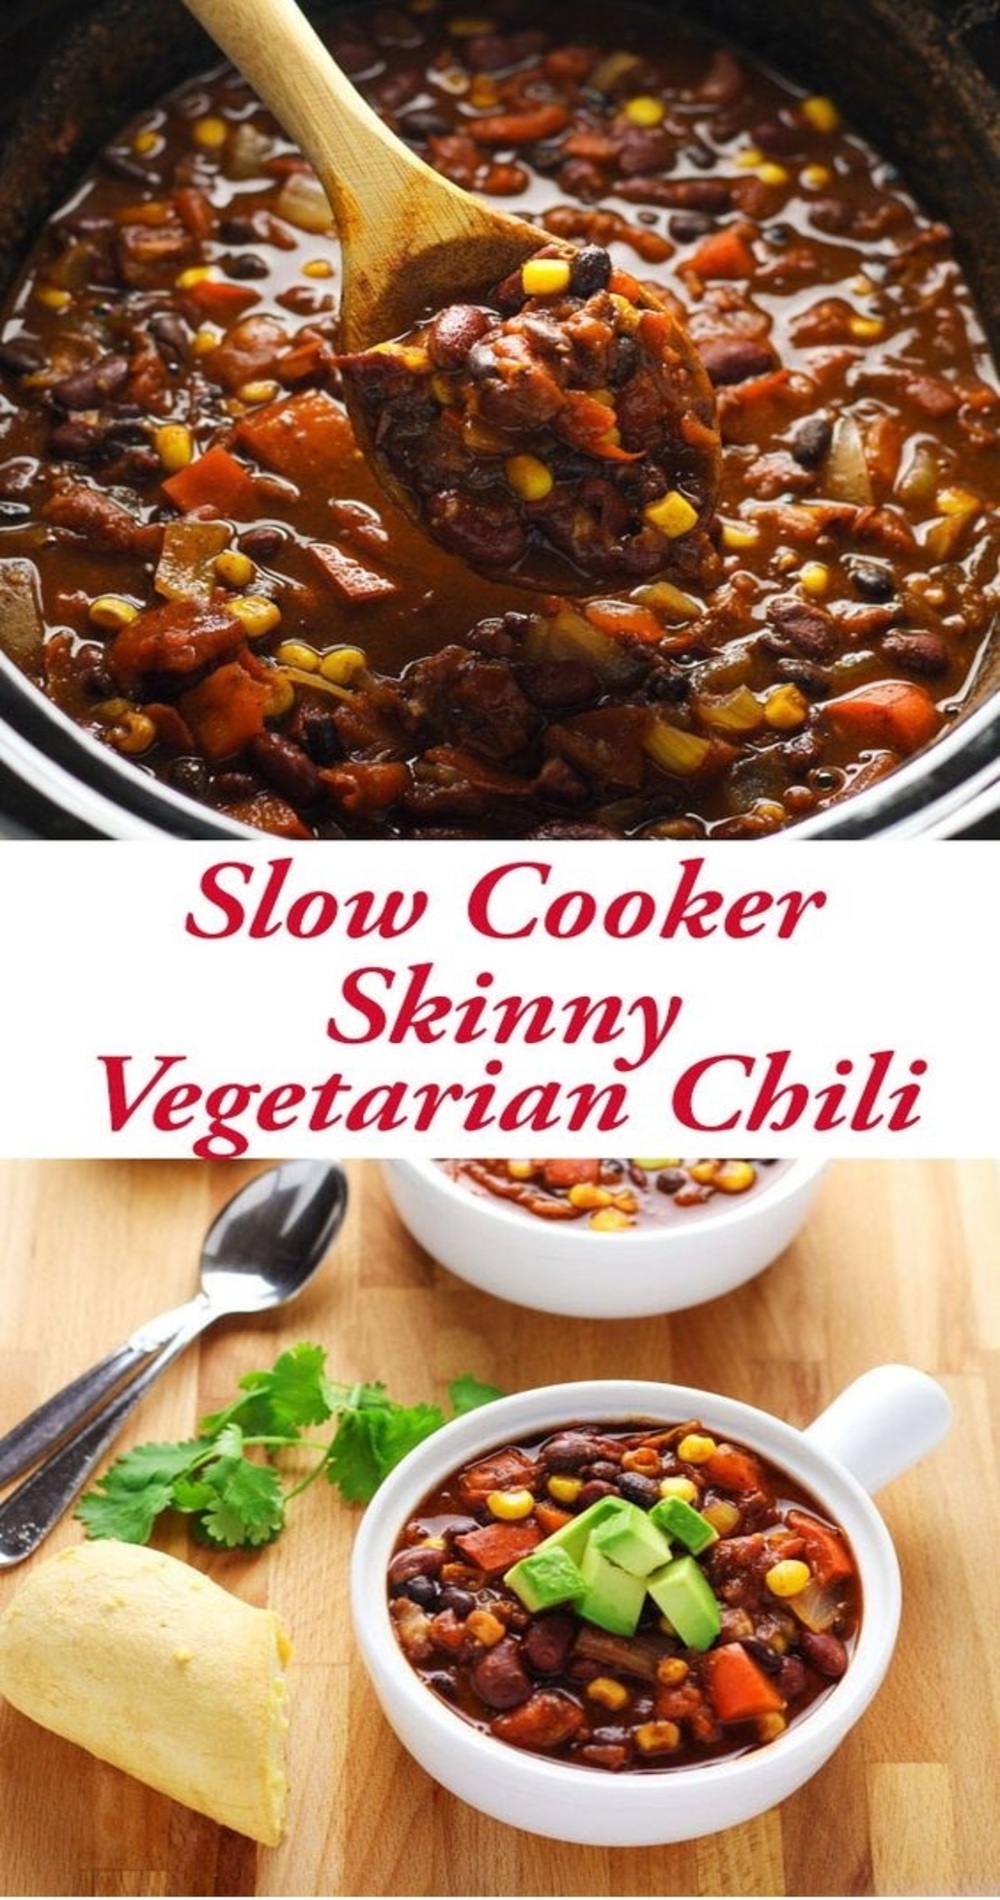 Slow Cooker Skinny Vegetarian Chili